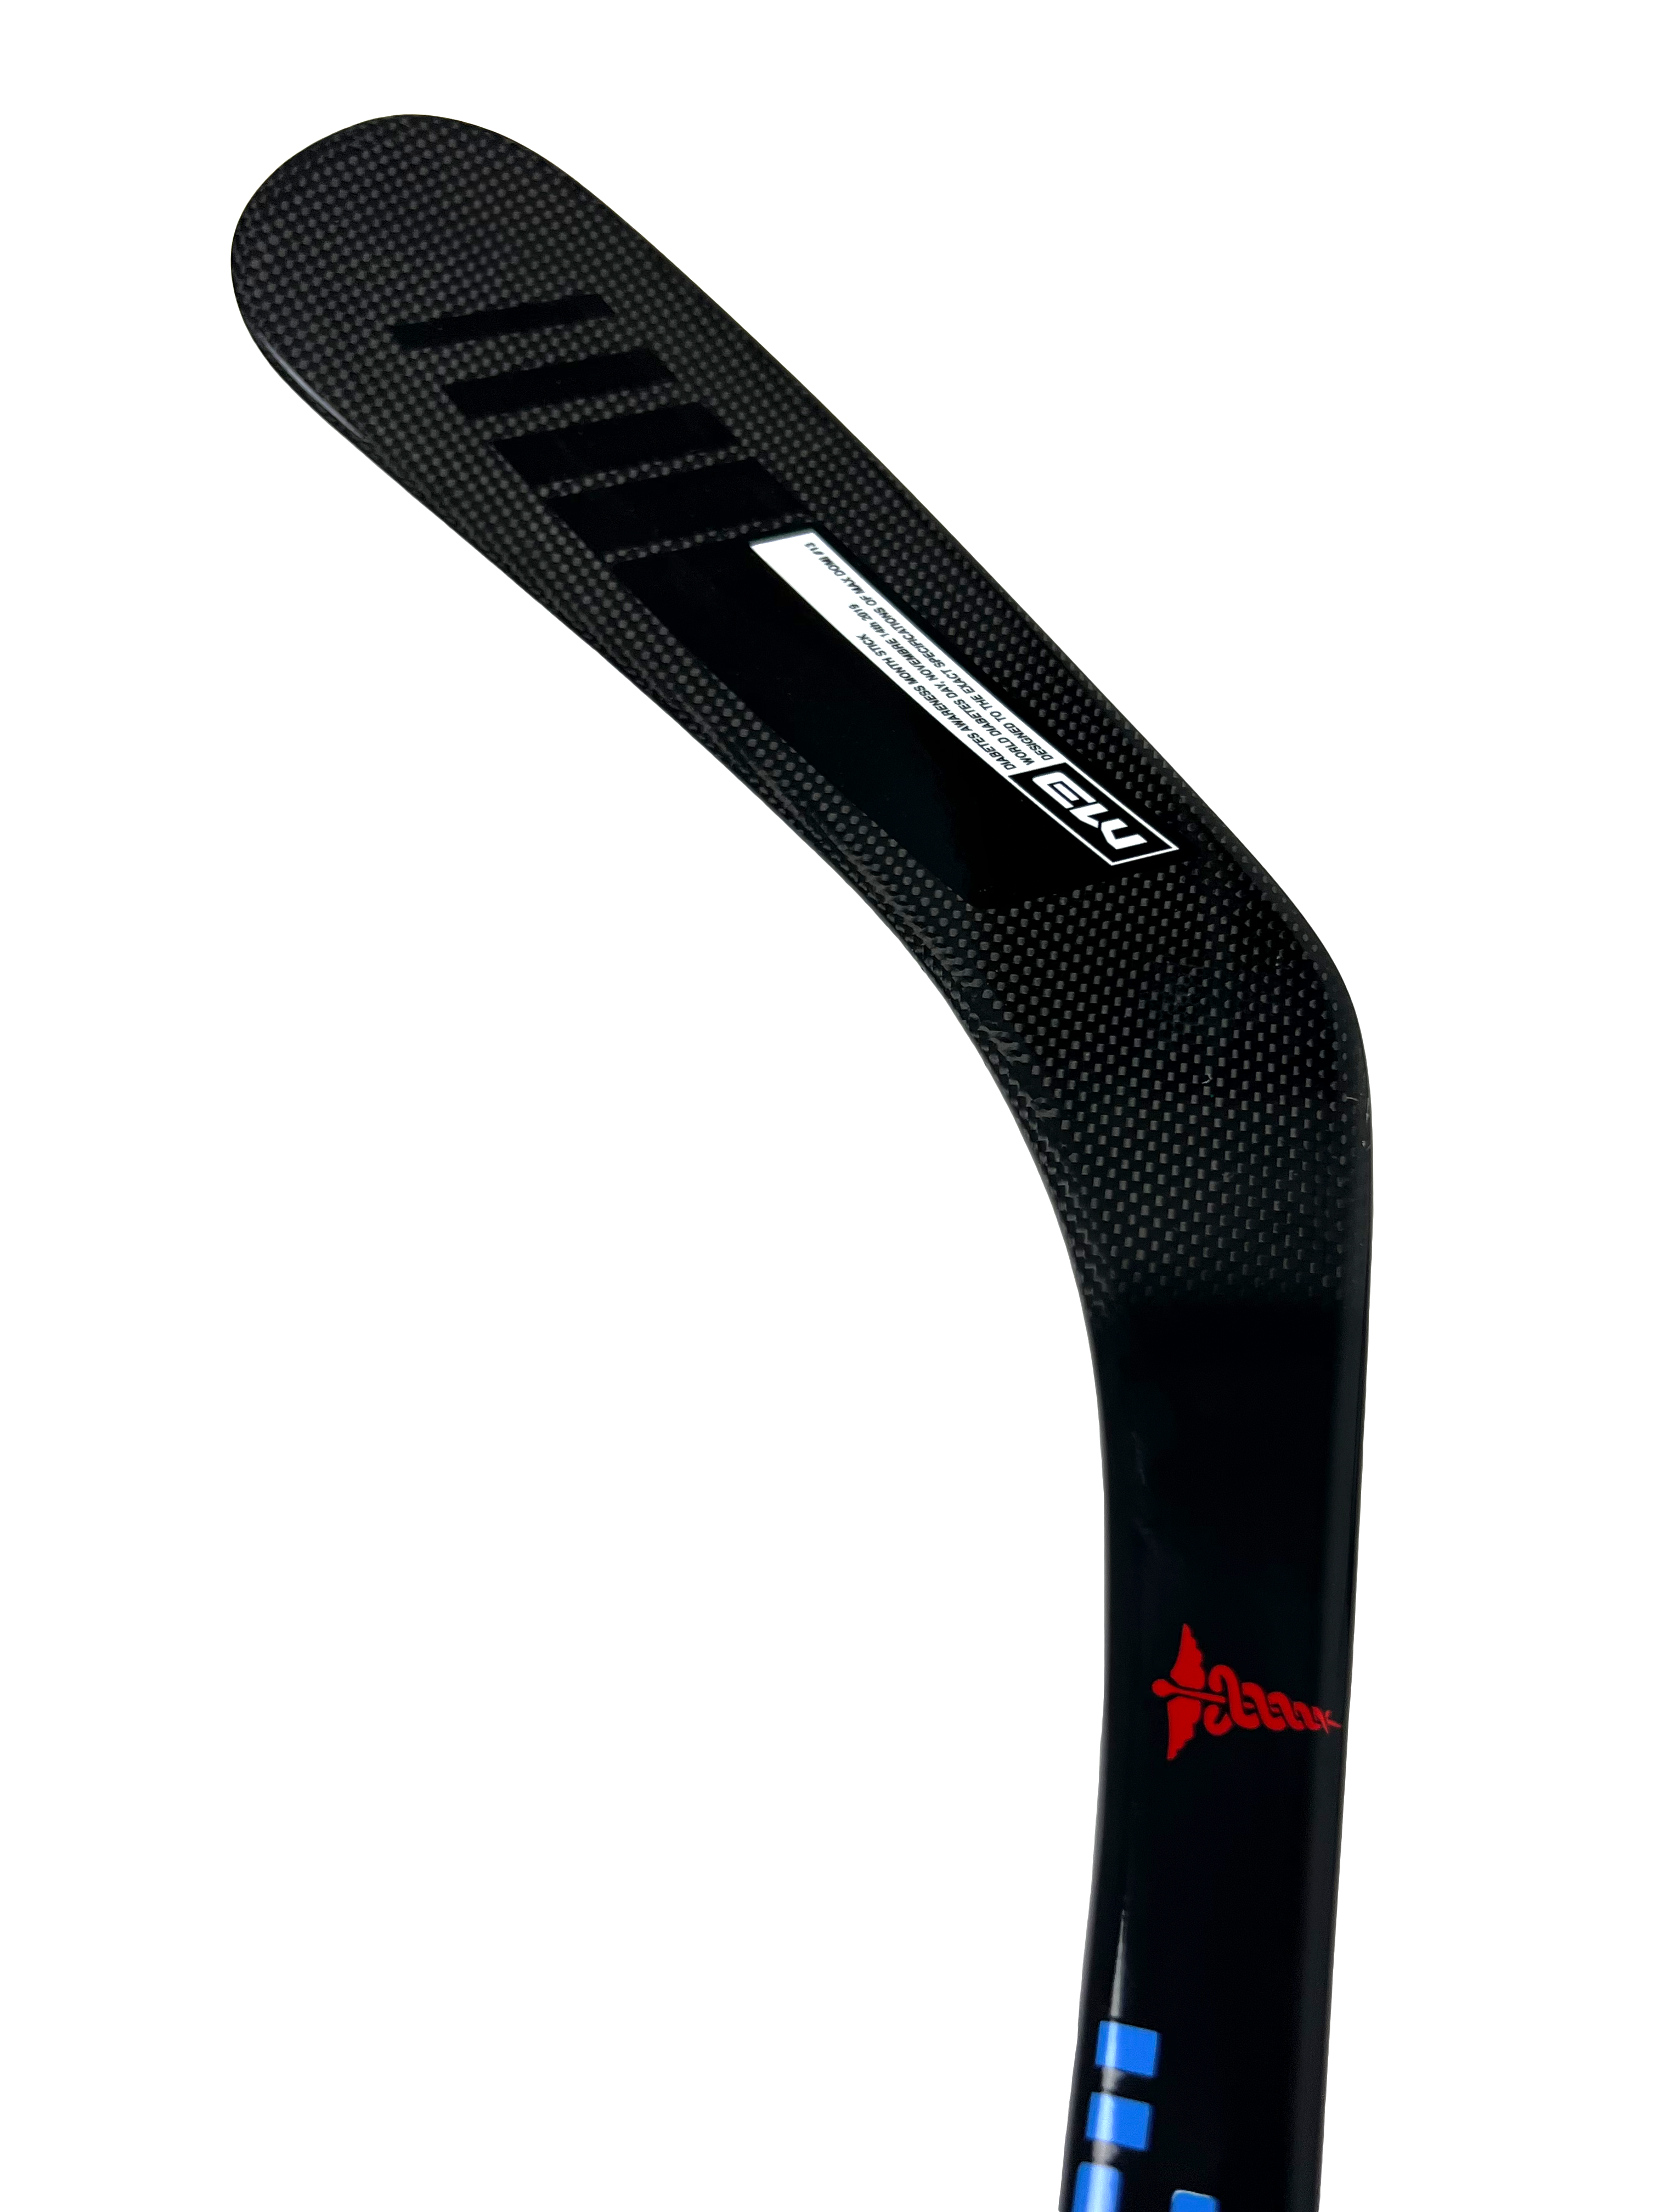 What Stick Does Max Domi Use? – HockeyStickMan